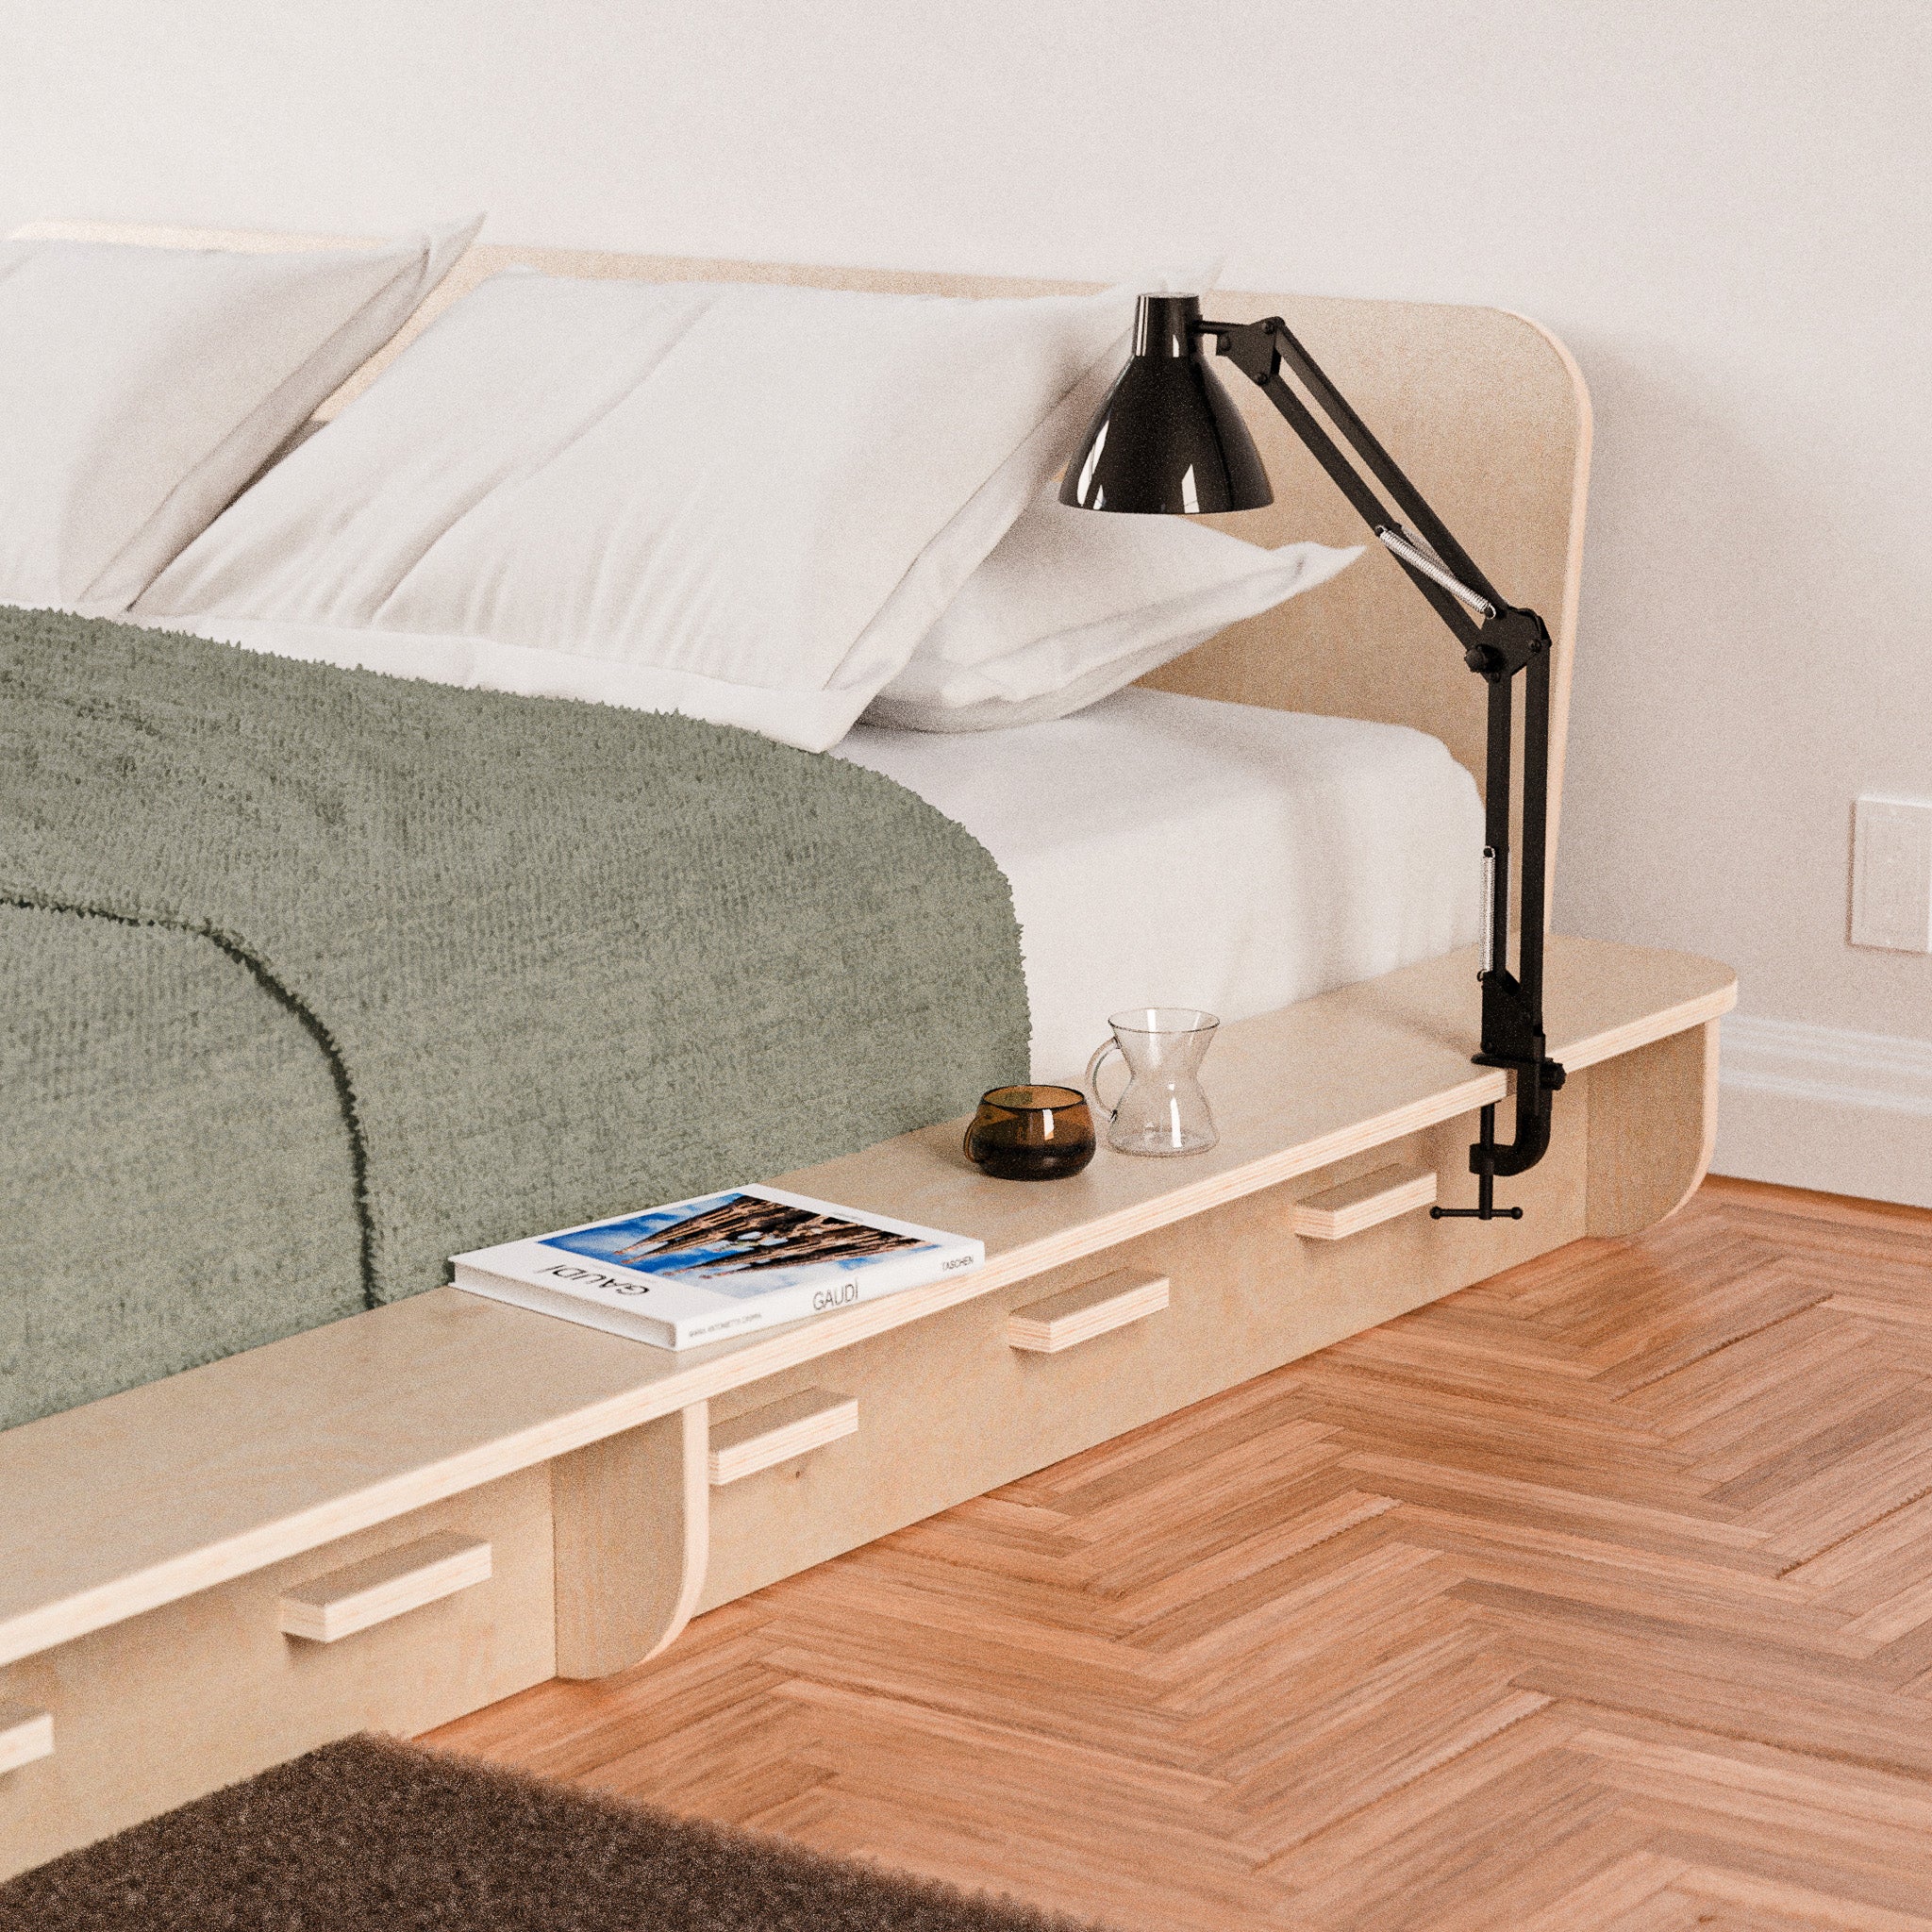 Bed Platform, wood, in modern bedroom. Minimalist design. Japanese joinery.